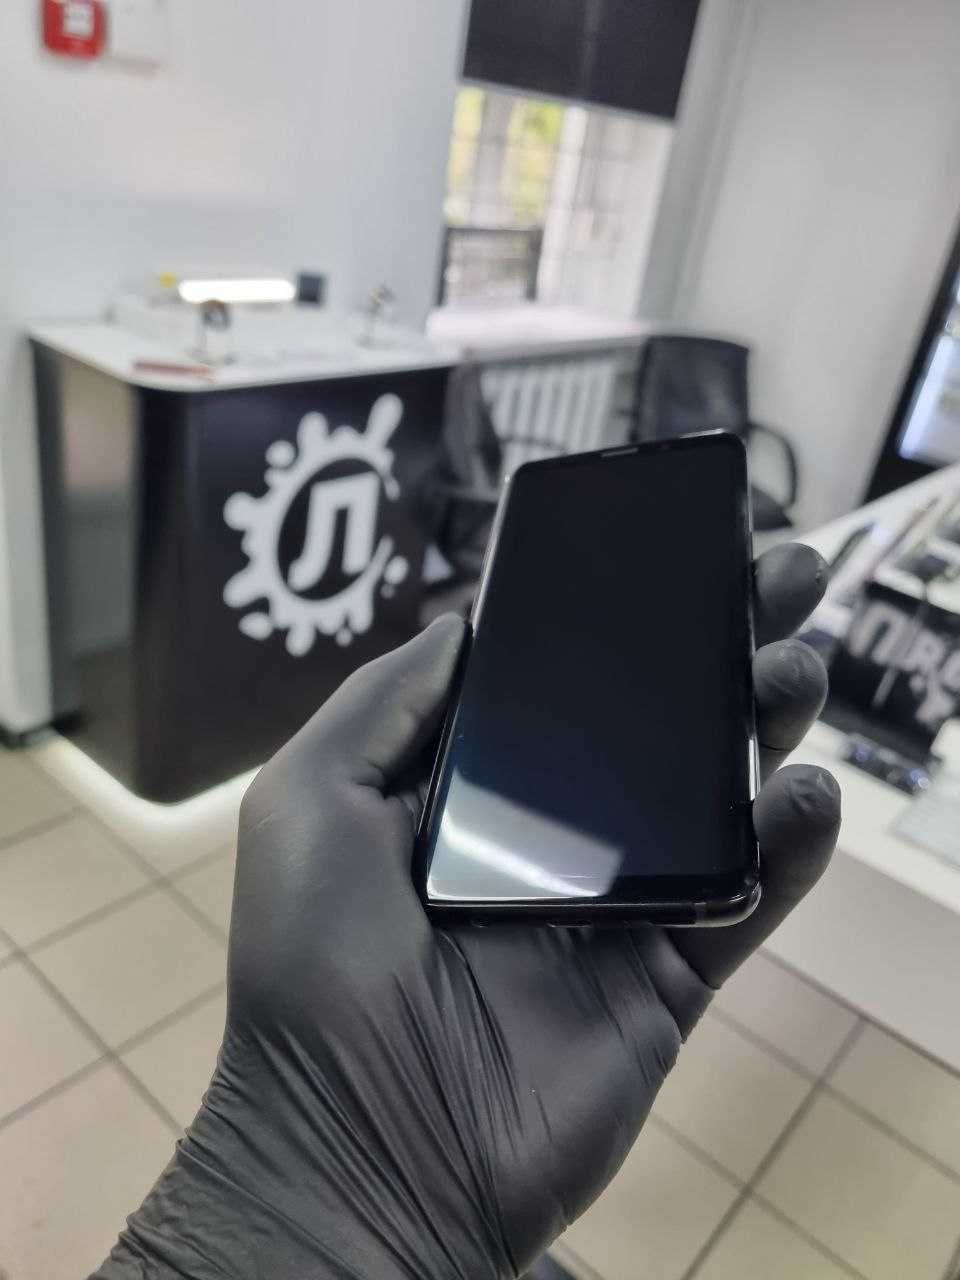 Samsung S9 (G 960) black 4/64